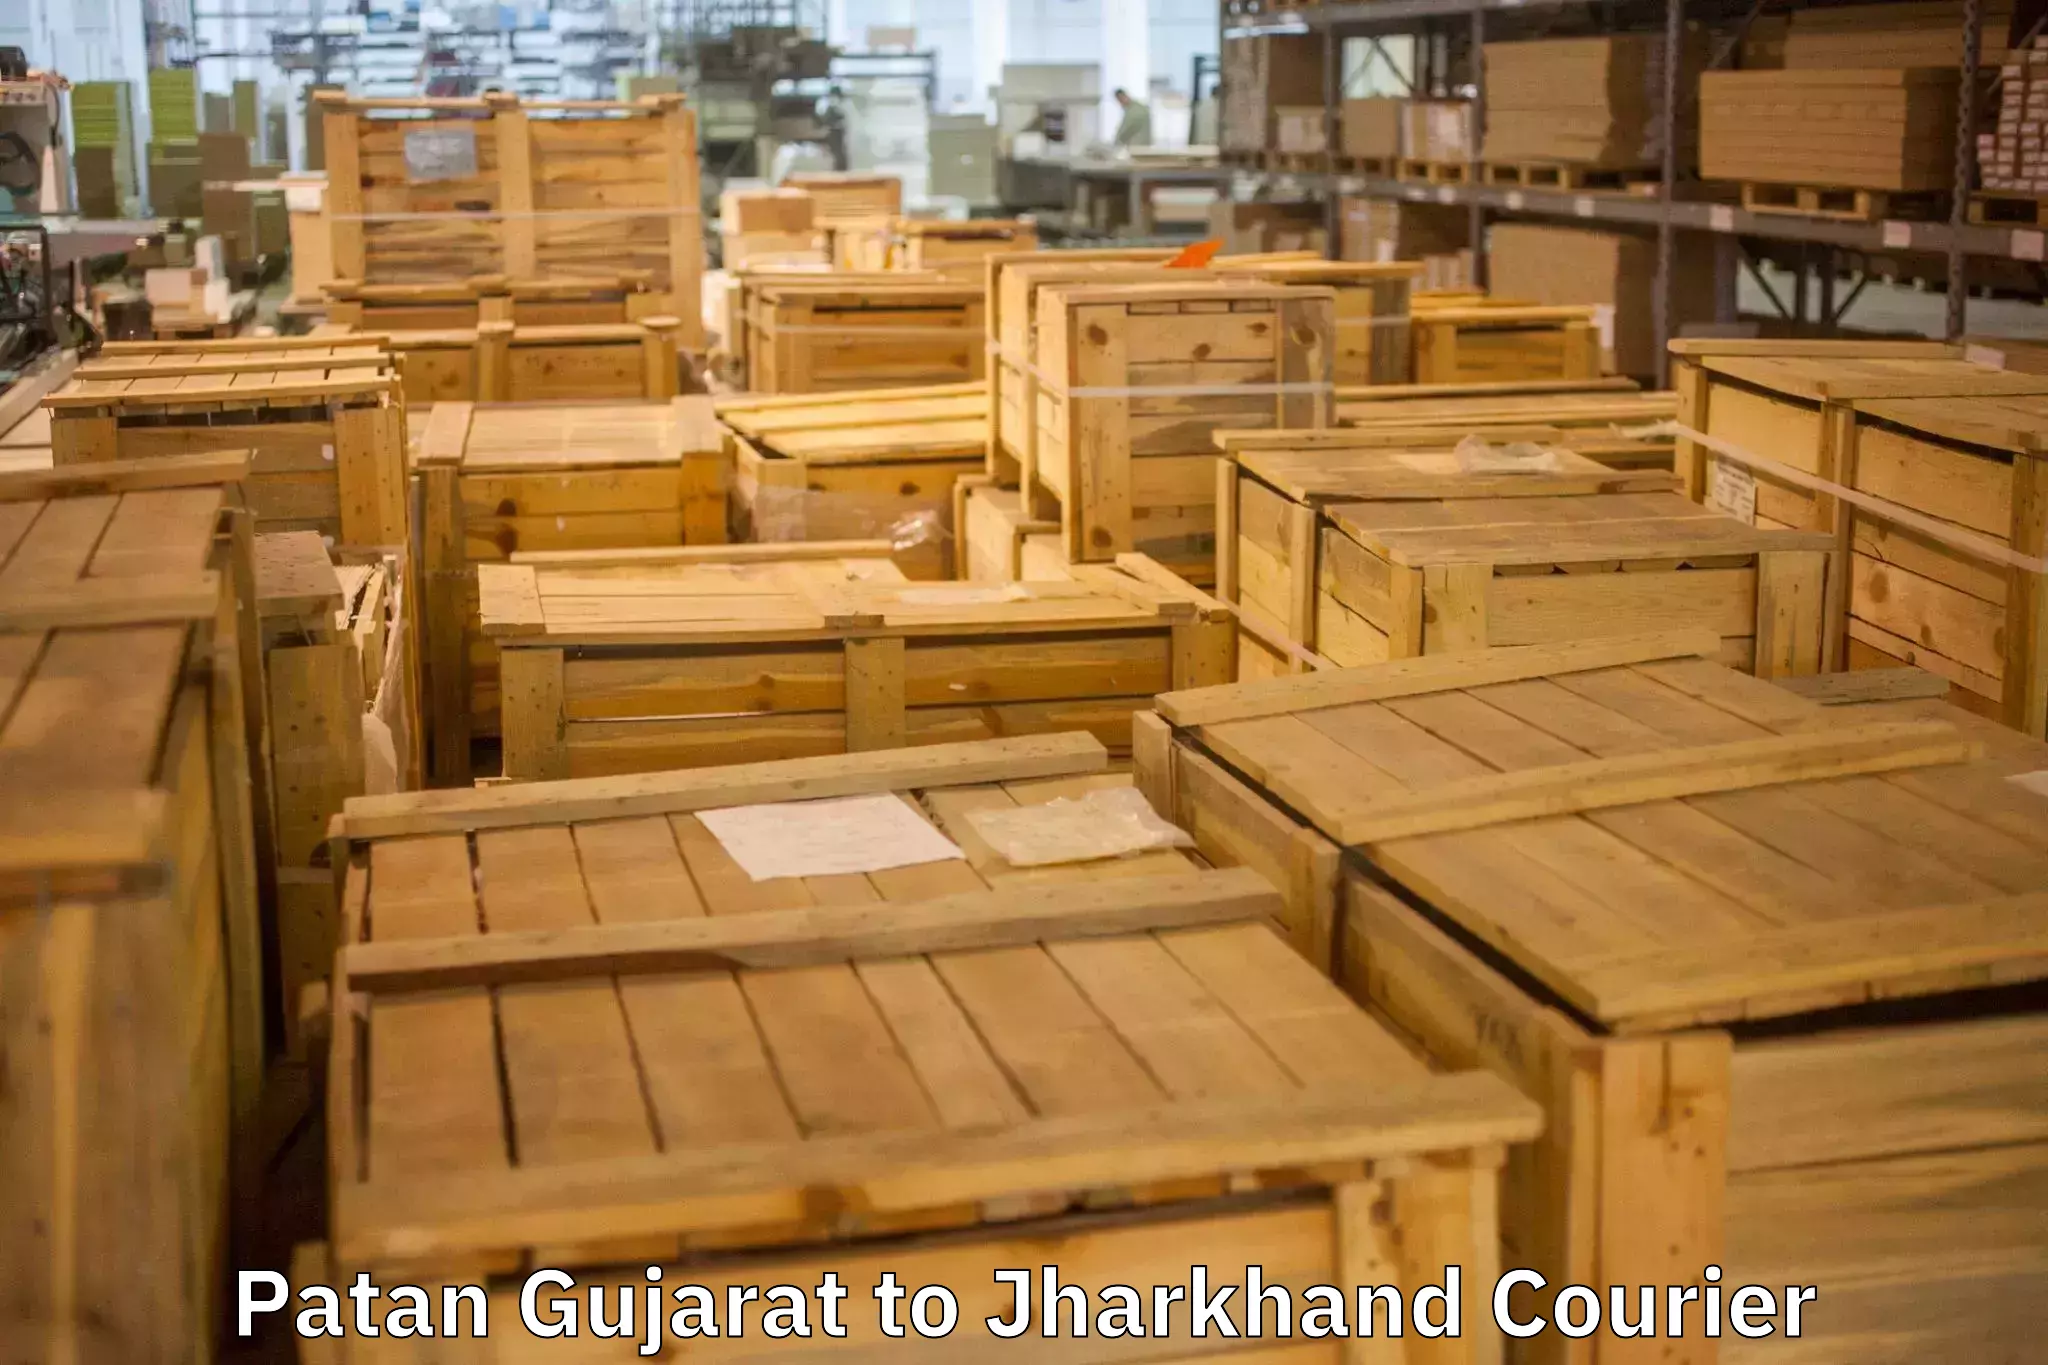 Seamless moving process Patan Gujarat to Ranchi